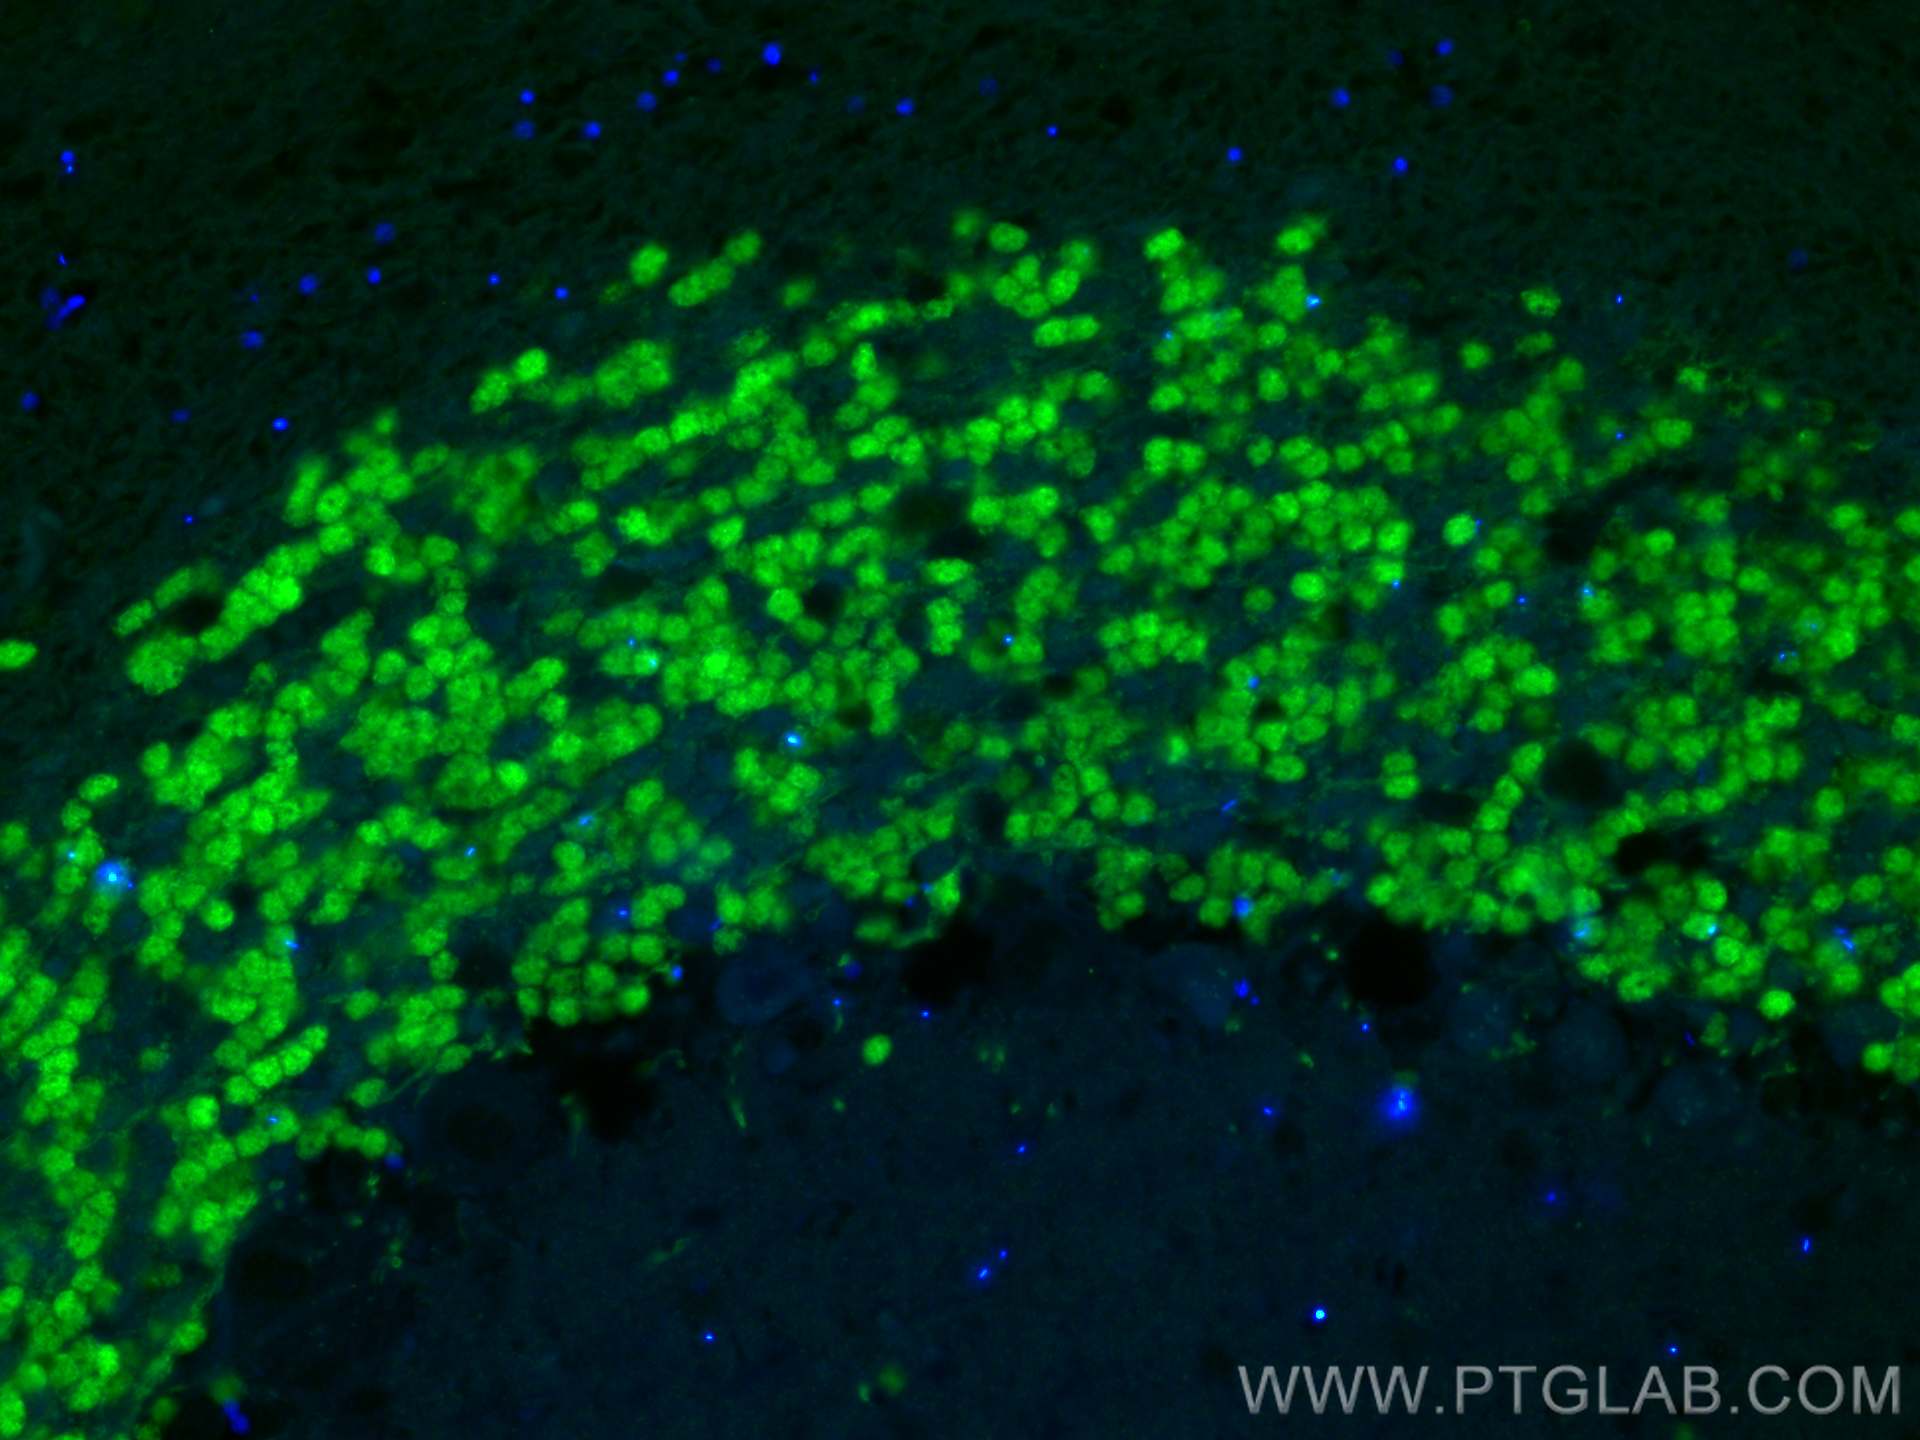 Immunofluorescence (IF) / fluorescent staining of mouse cerebellum tissue using CoraLite® Plus 488-conjugated NeuN Polyclonal anti (CL488-26975)